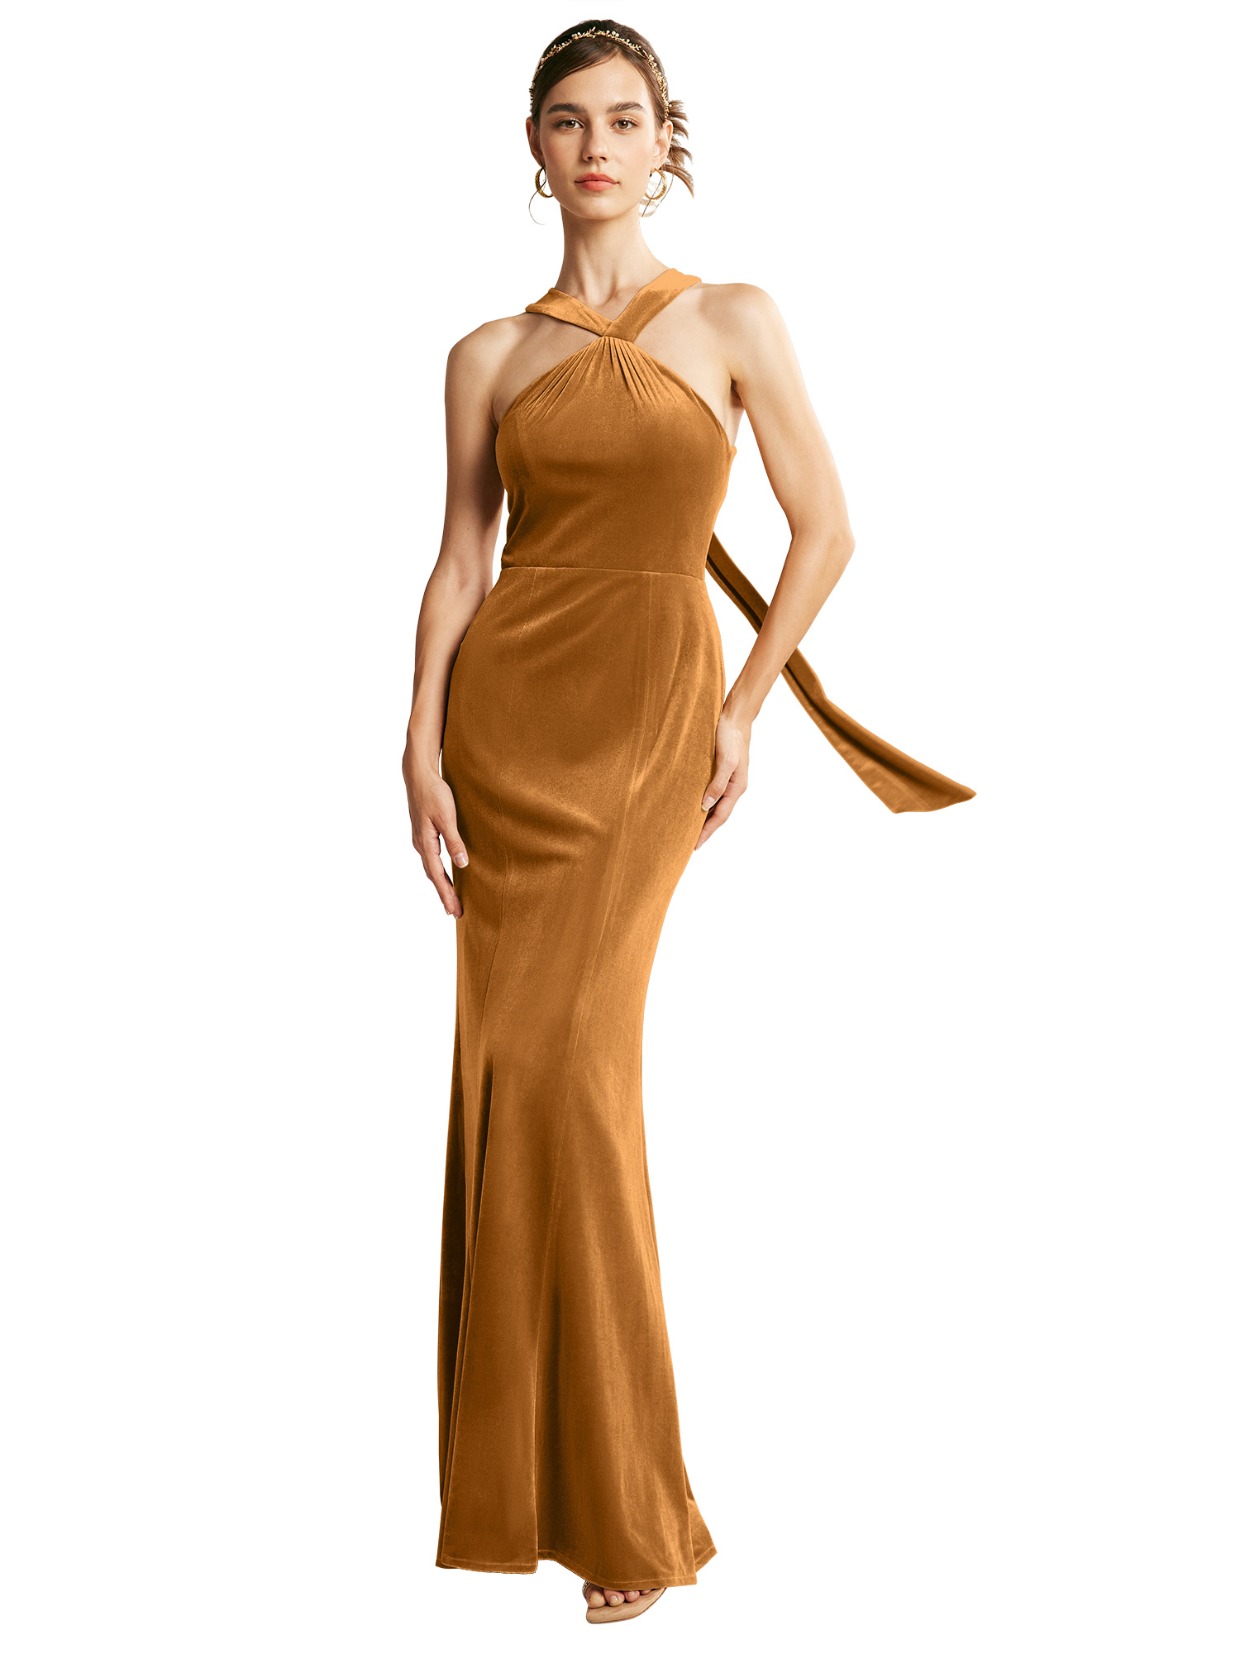 tie halter bridesmaid dress in amber velvet by AW Bridal